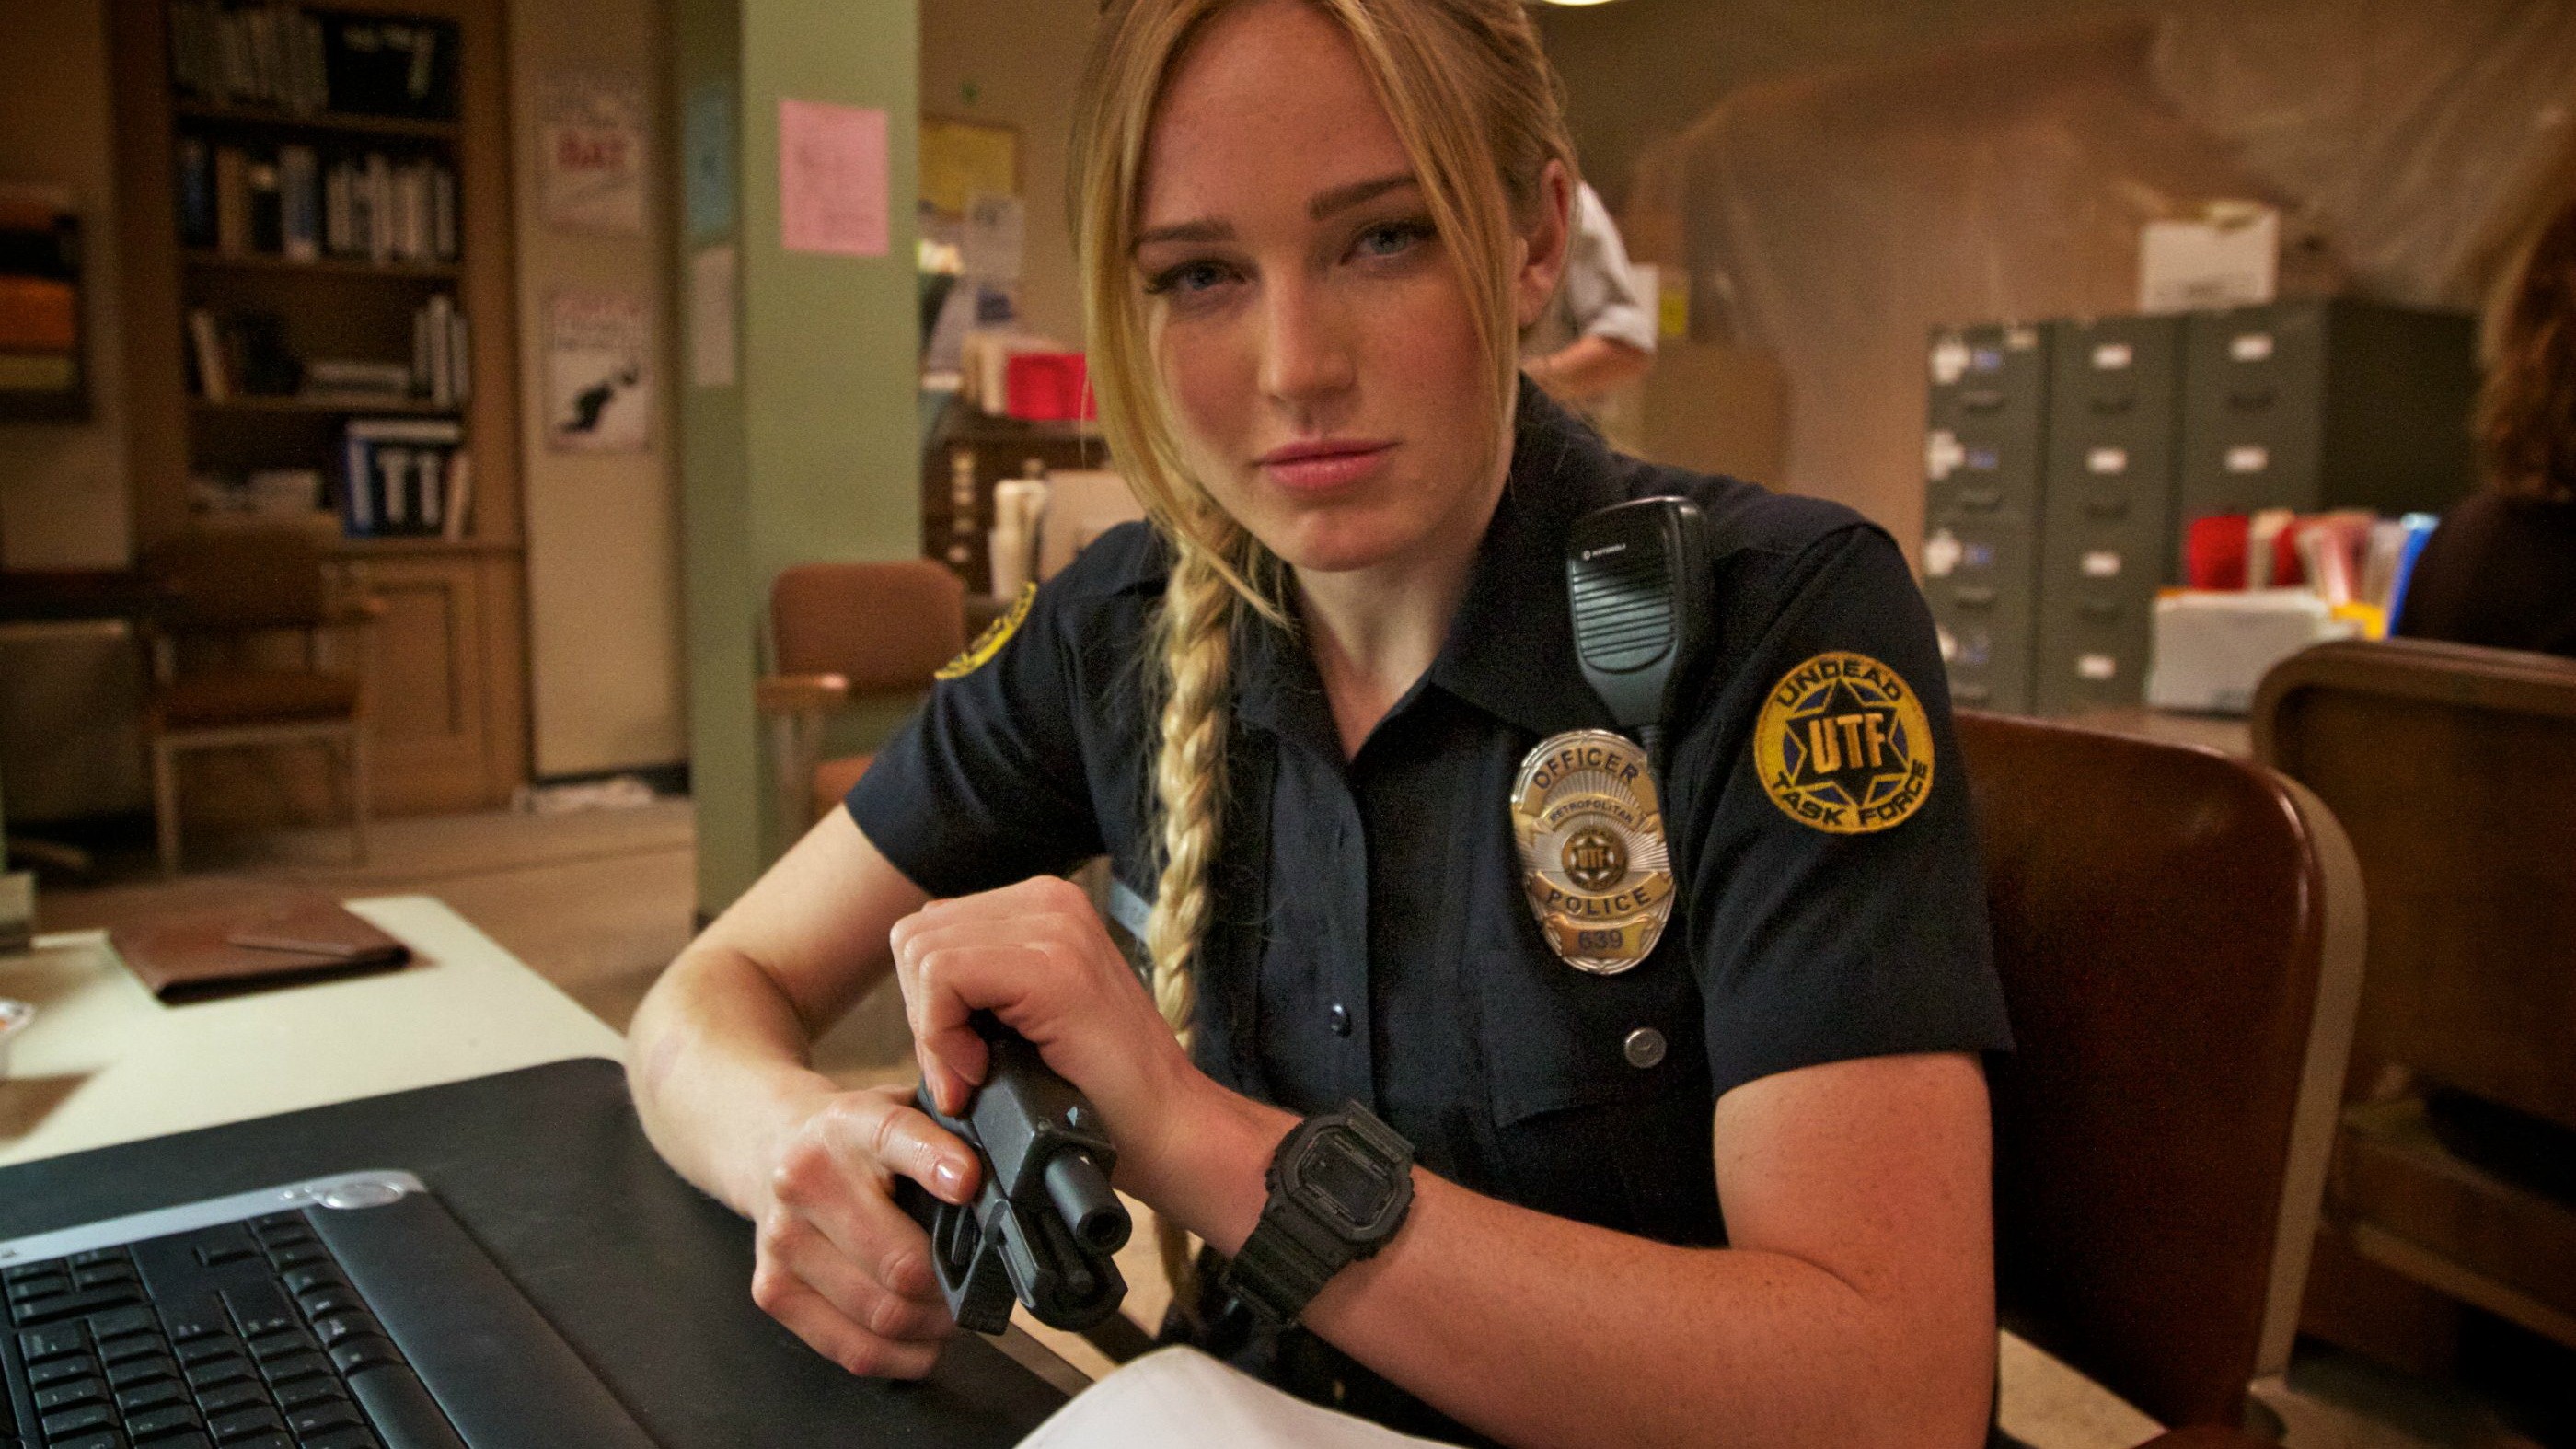 Caity Lotz, Blonde, Police, Glock 17, Death Valley, USA Wallpaper